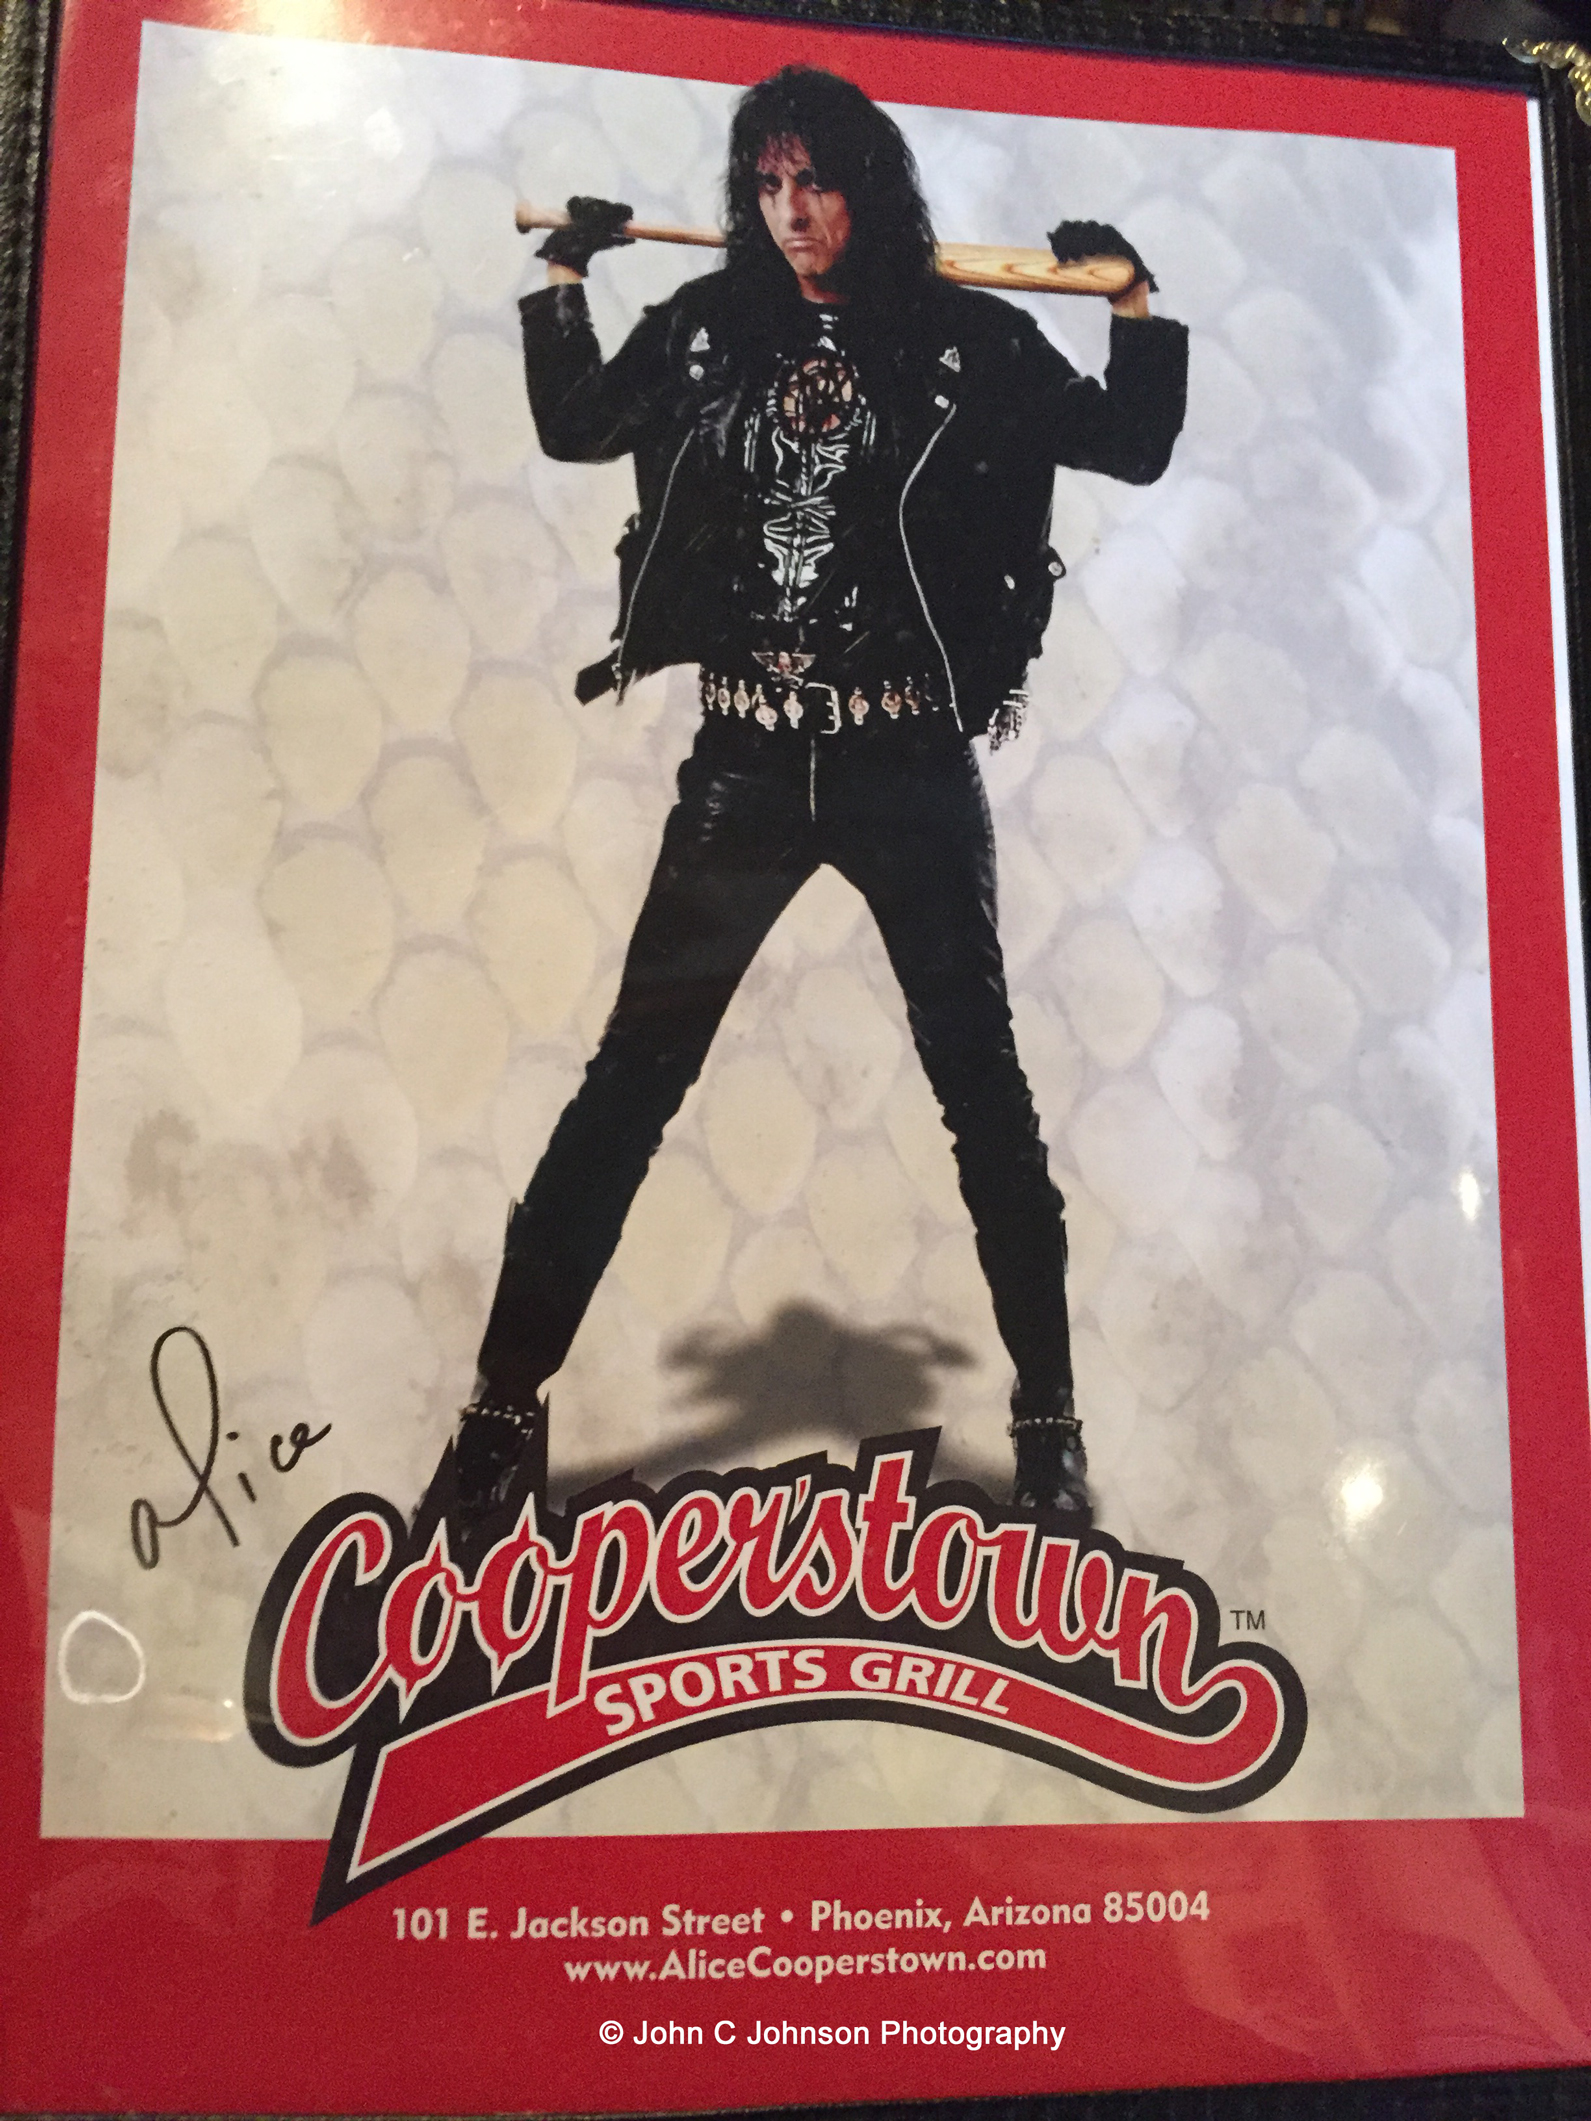 Alice Cooper'stown Sports Grill Phoenix, Arizona